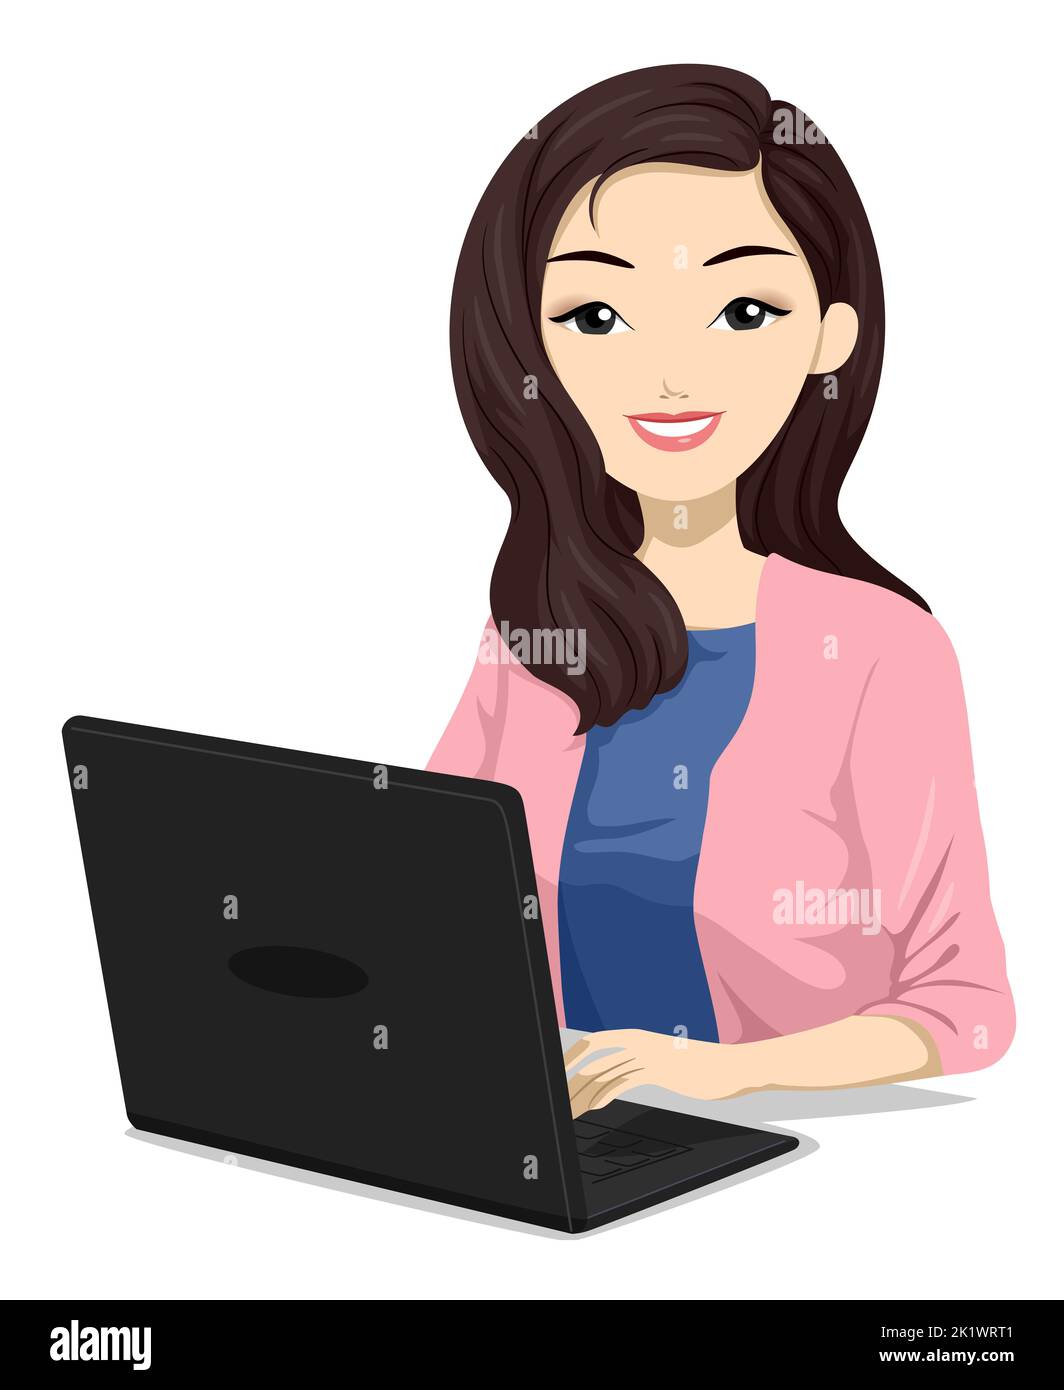 Illustration of North Eastern Asian Teen Girl Student Using Laptop Stock Photo